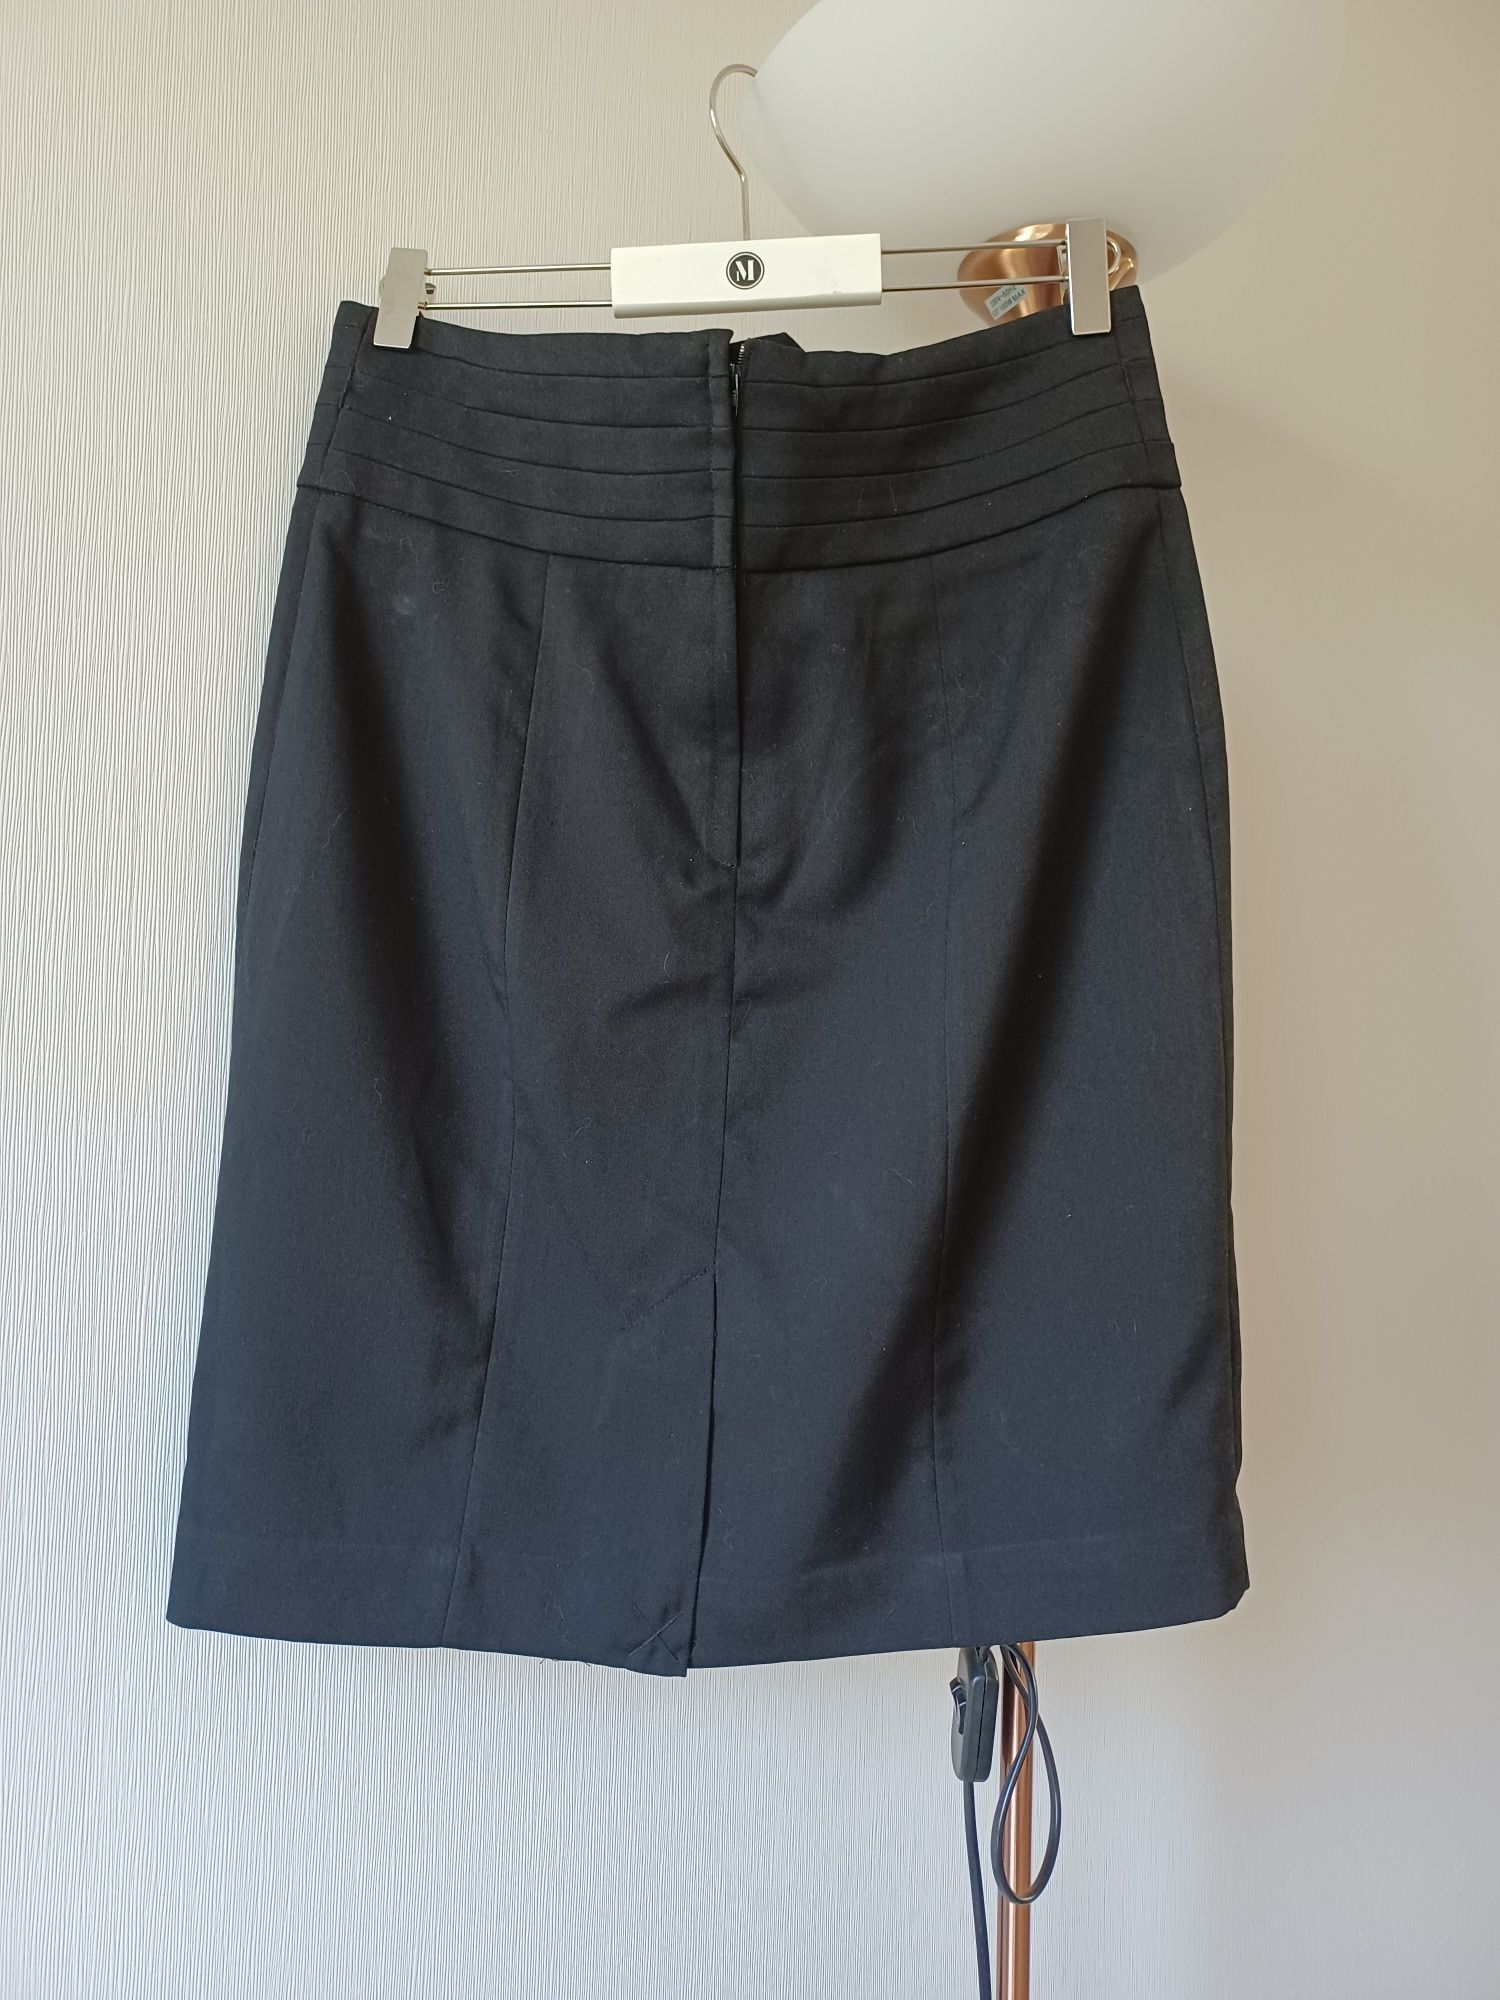 H&M elegancka czarna spódniczka 40 L